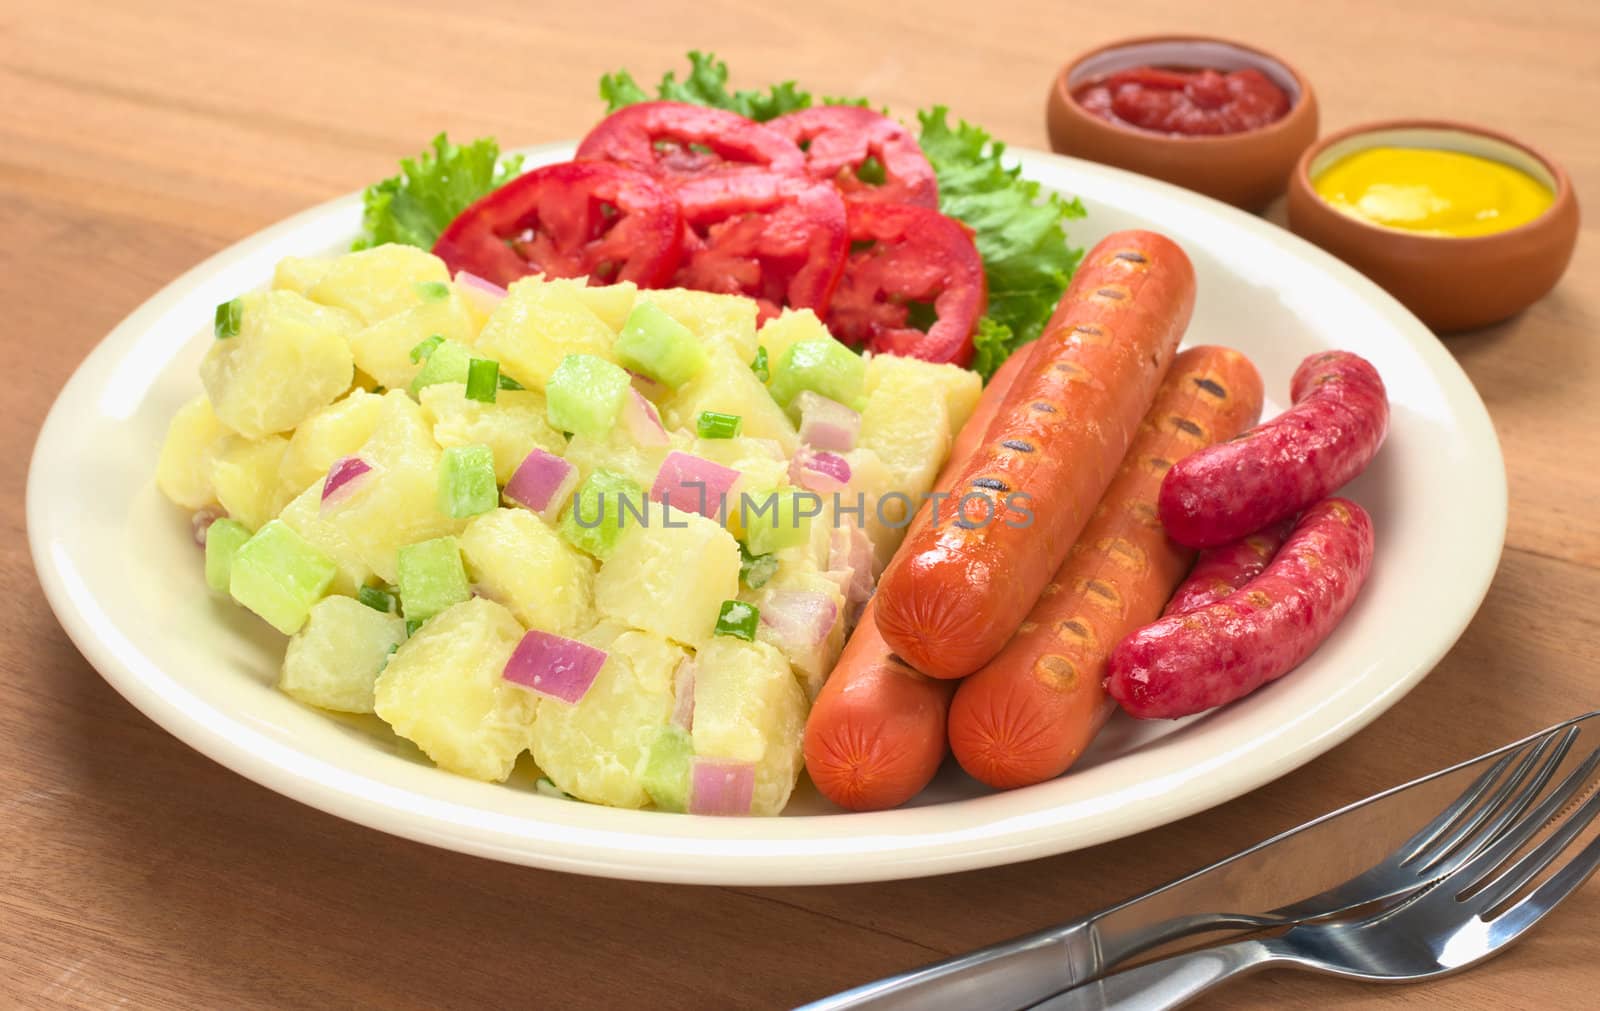 Sausages and Potato Salad by ildi